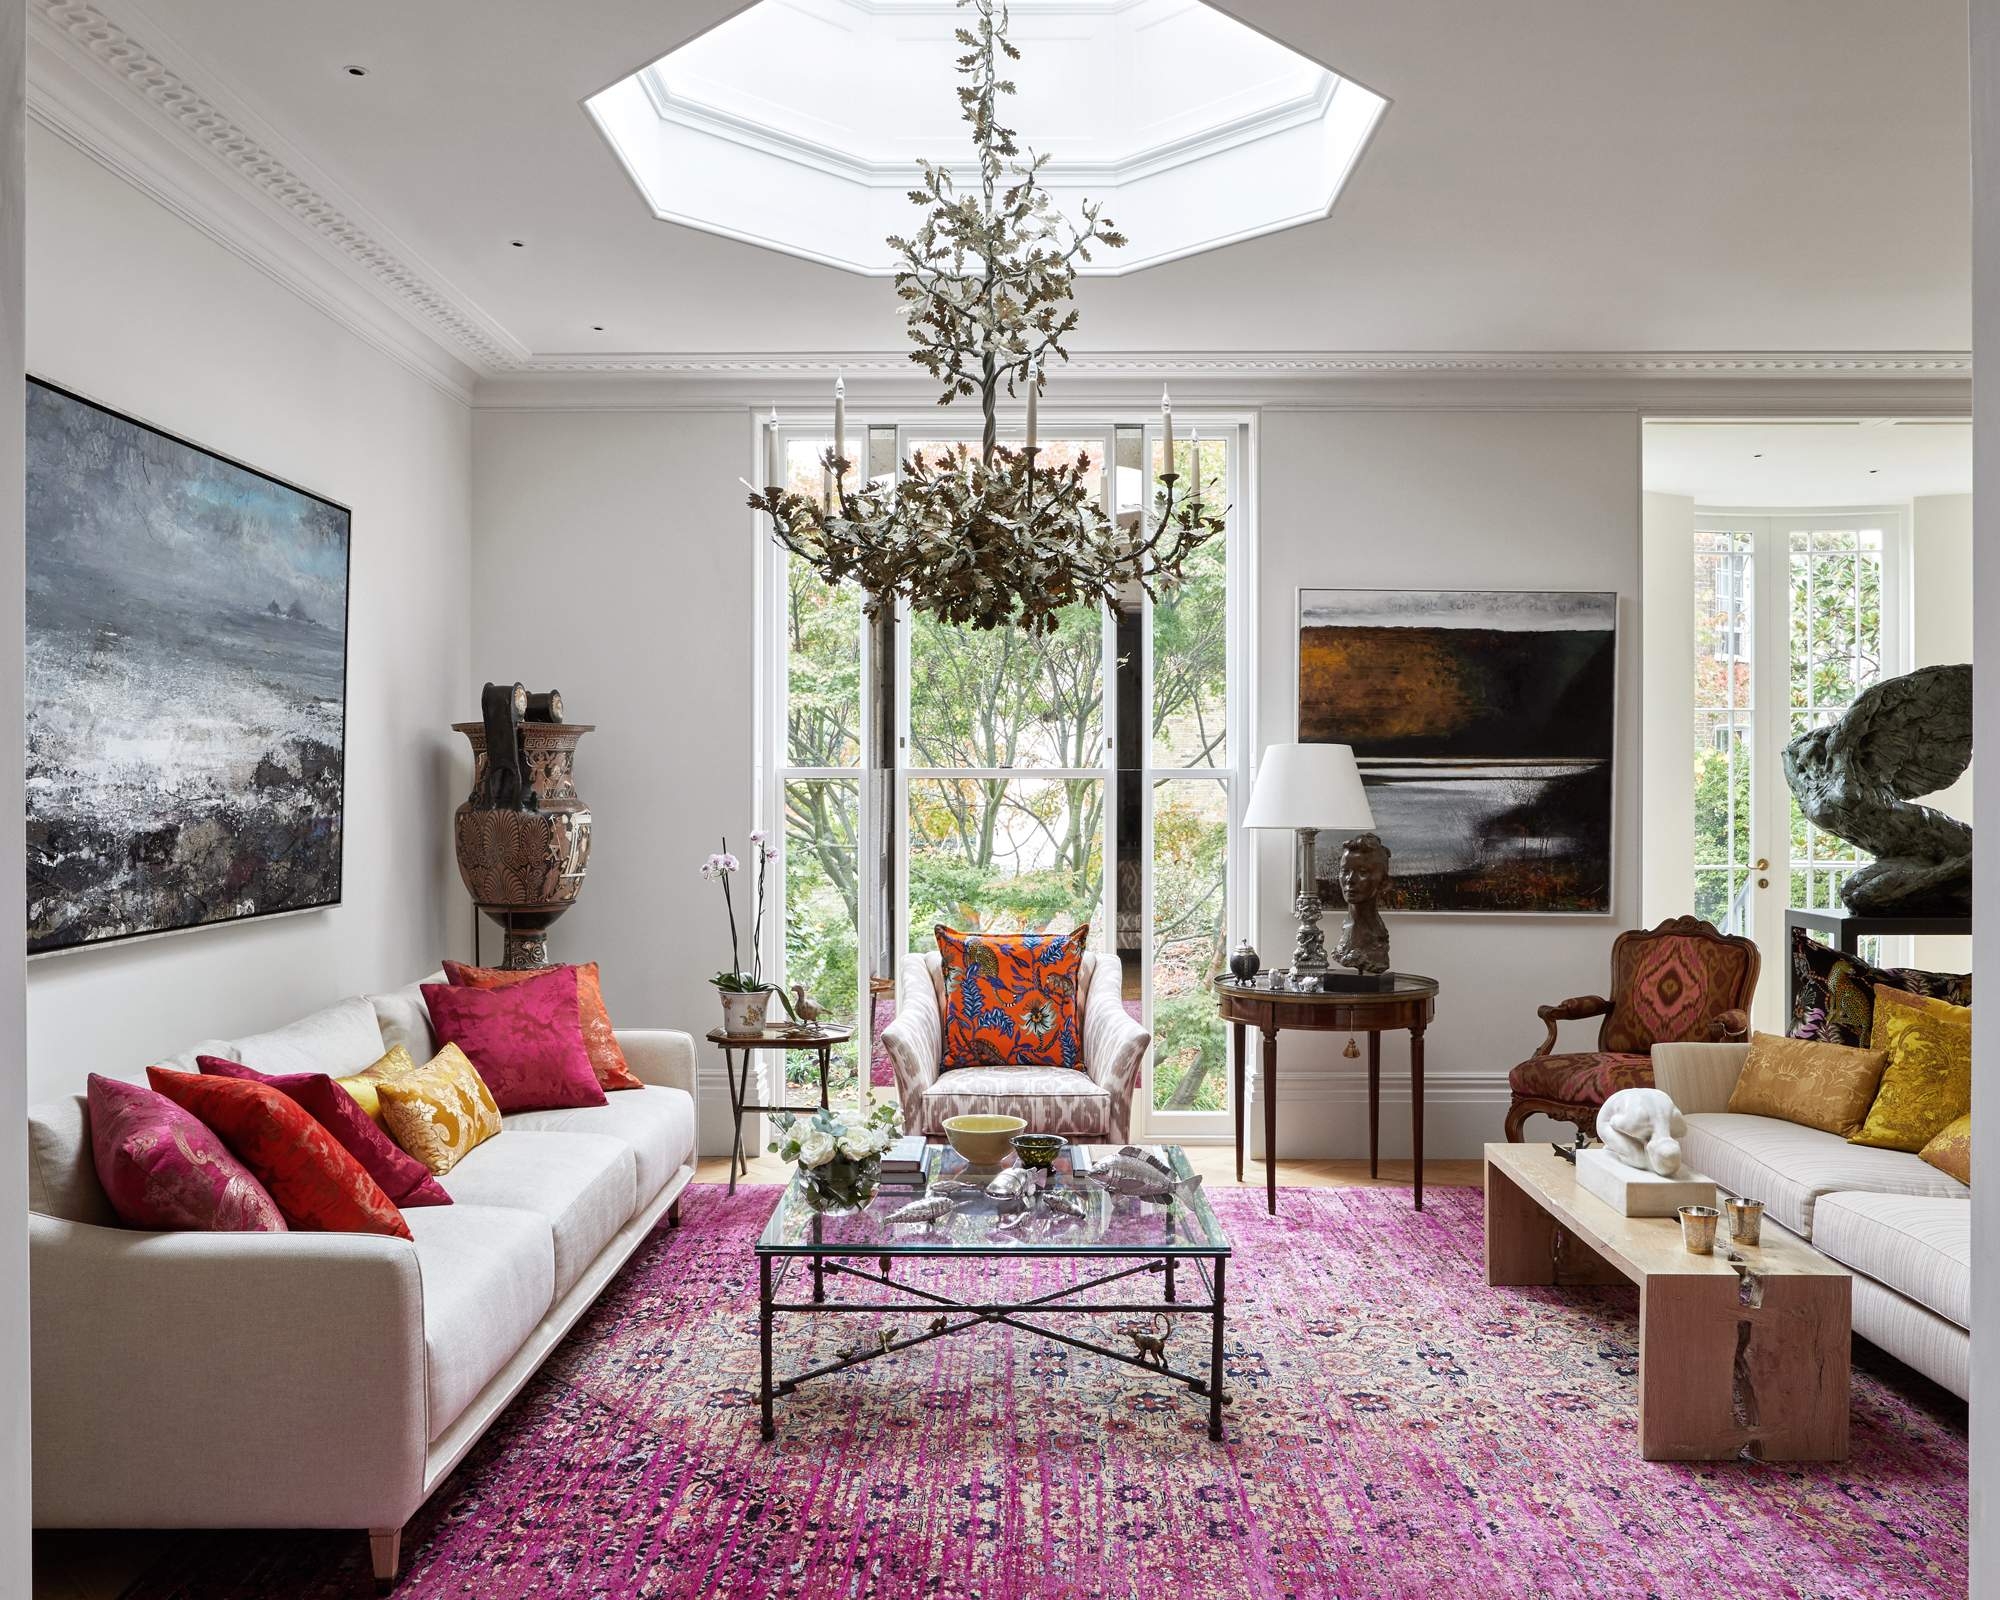 Living Room Chandelier Ideas: 15 Beautiful Centerpiece Designs | inside Chandelier In Living Room